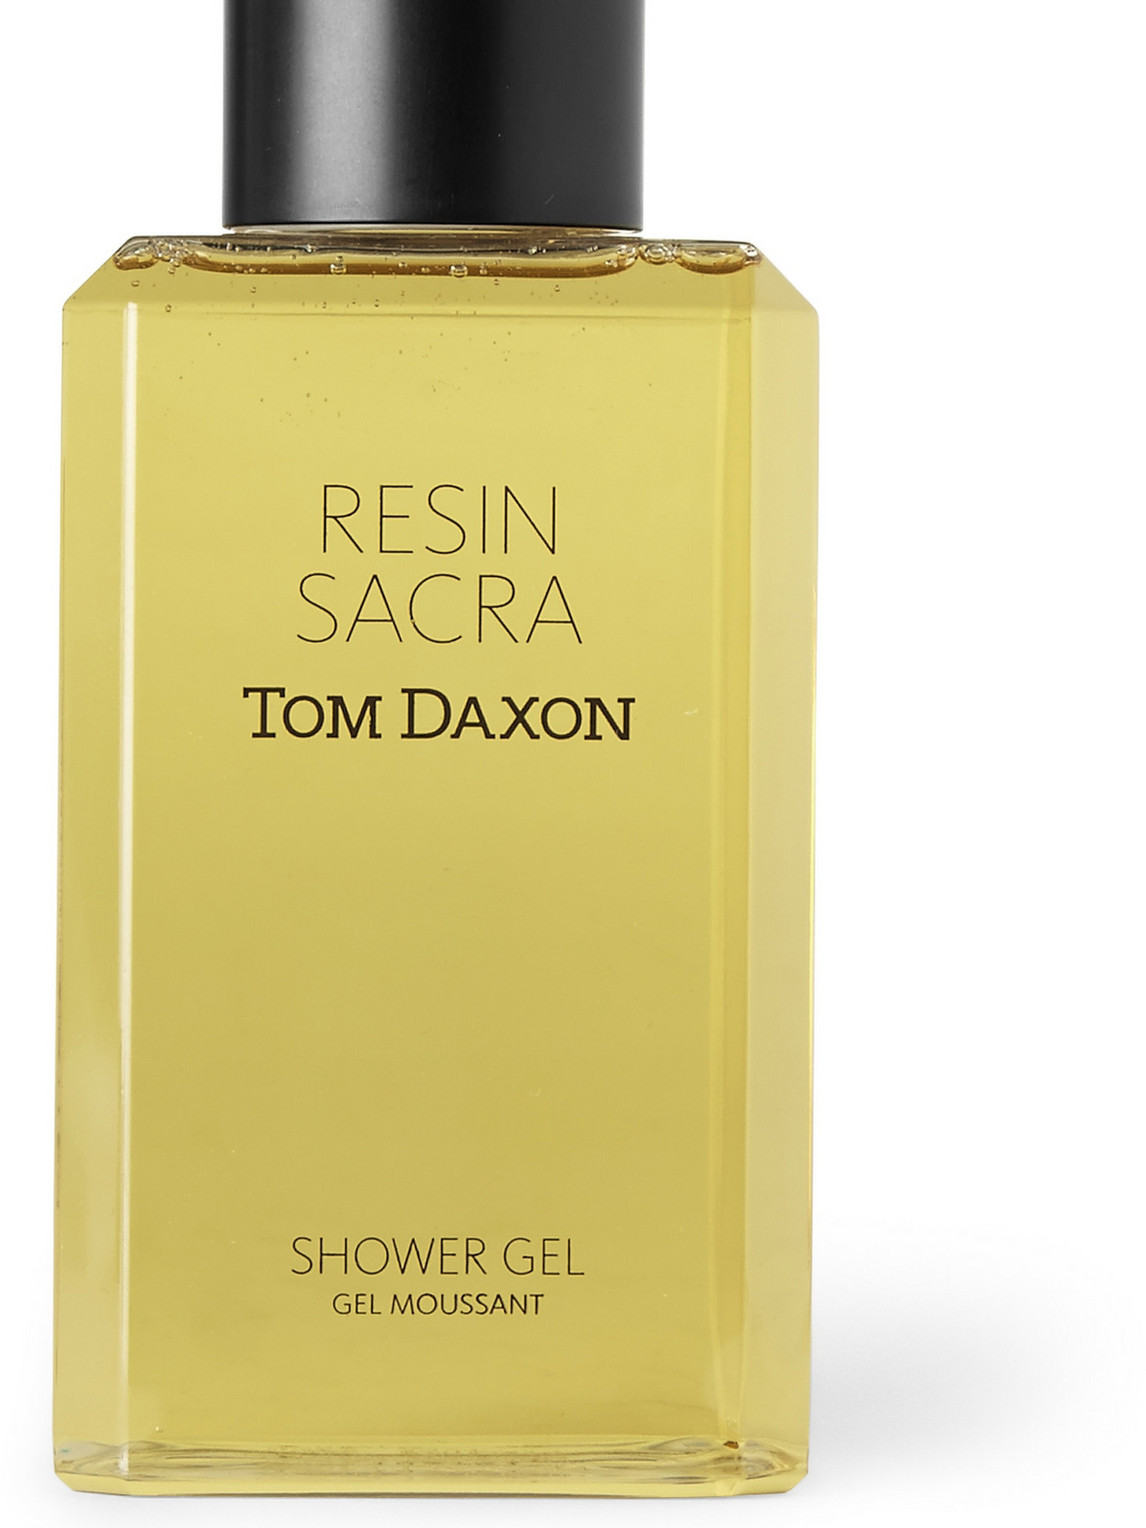 Tom Daxon Resin Sacra Shower Gel, 250ml In Colorless